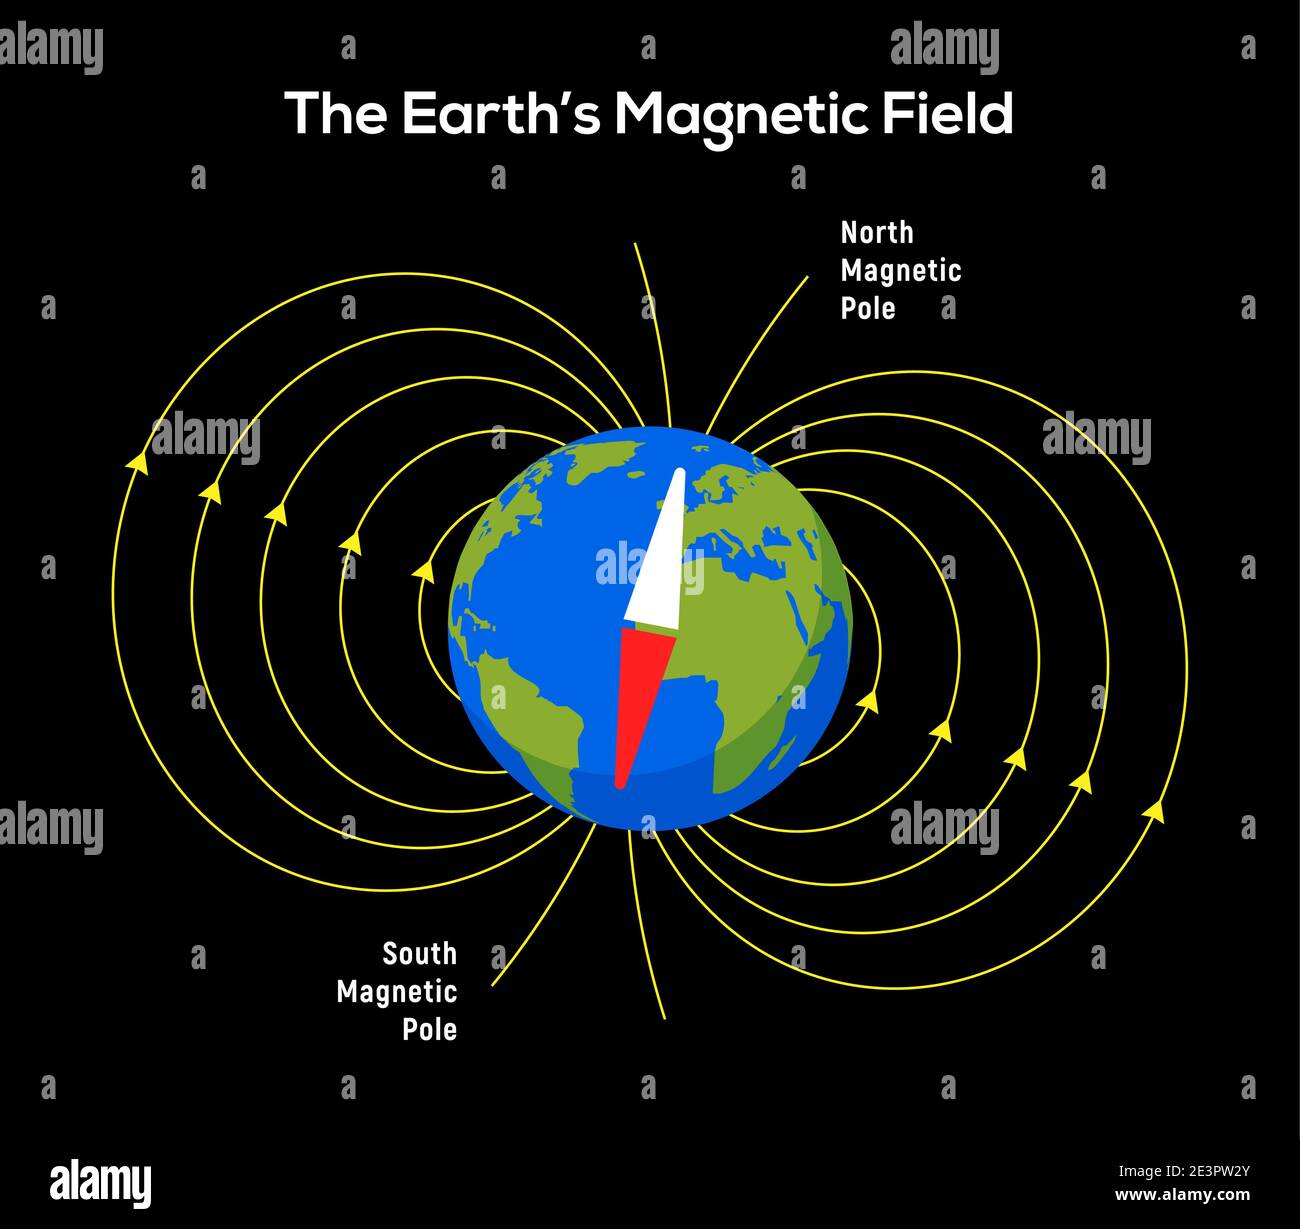 Diagram Of Magnetic Field